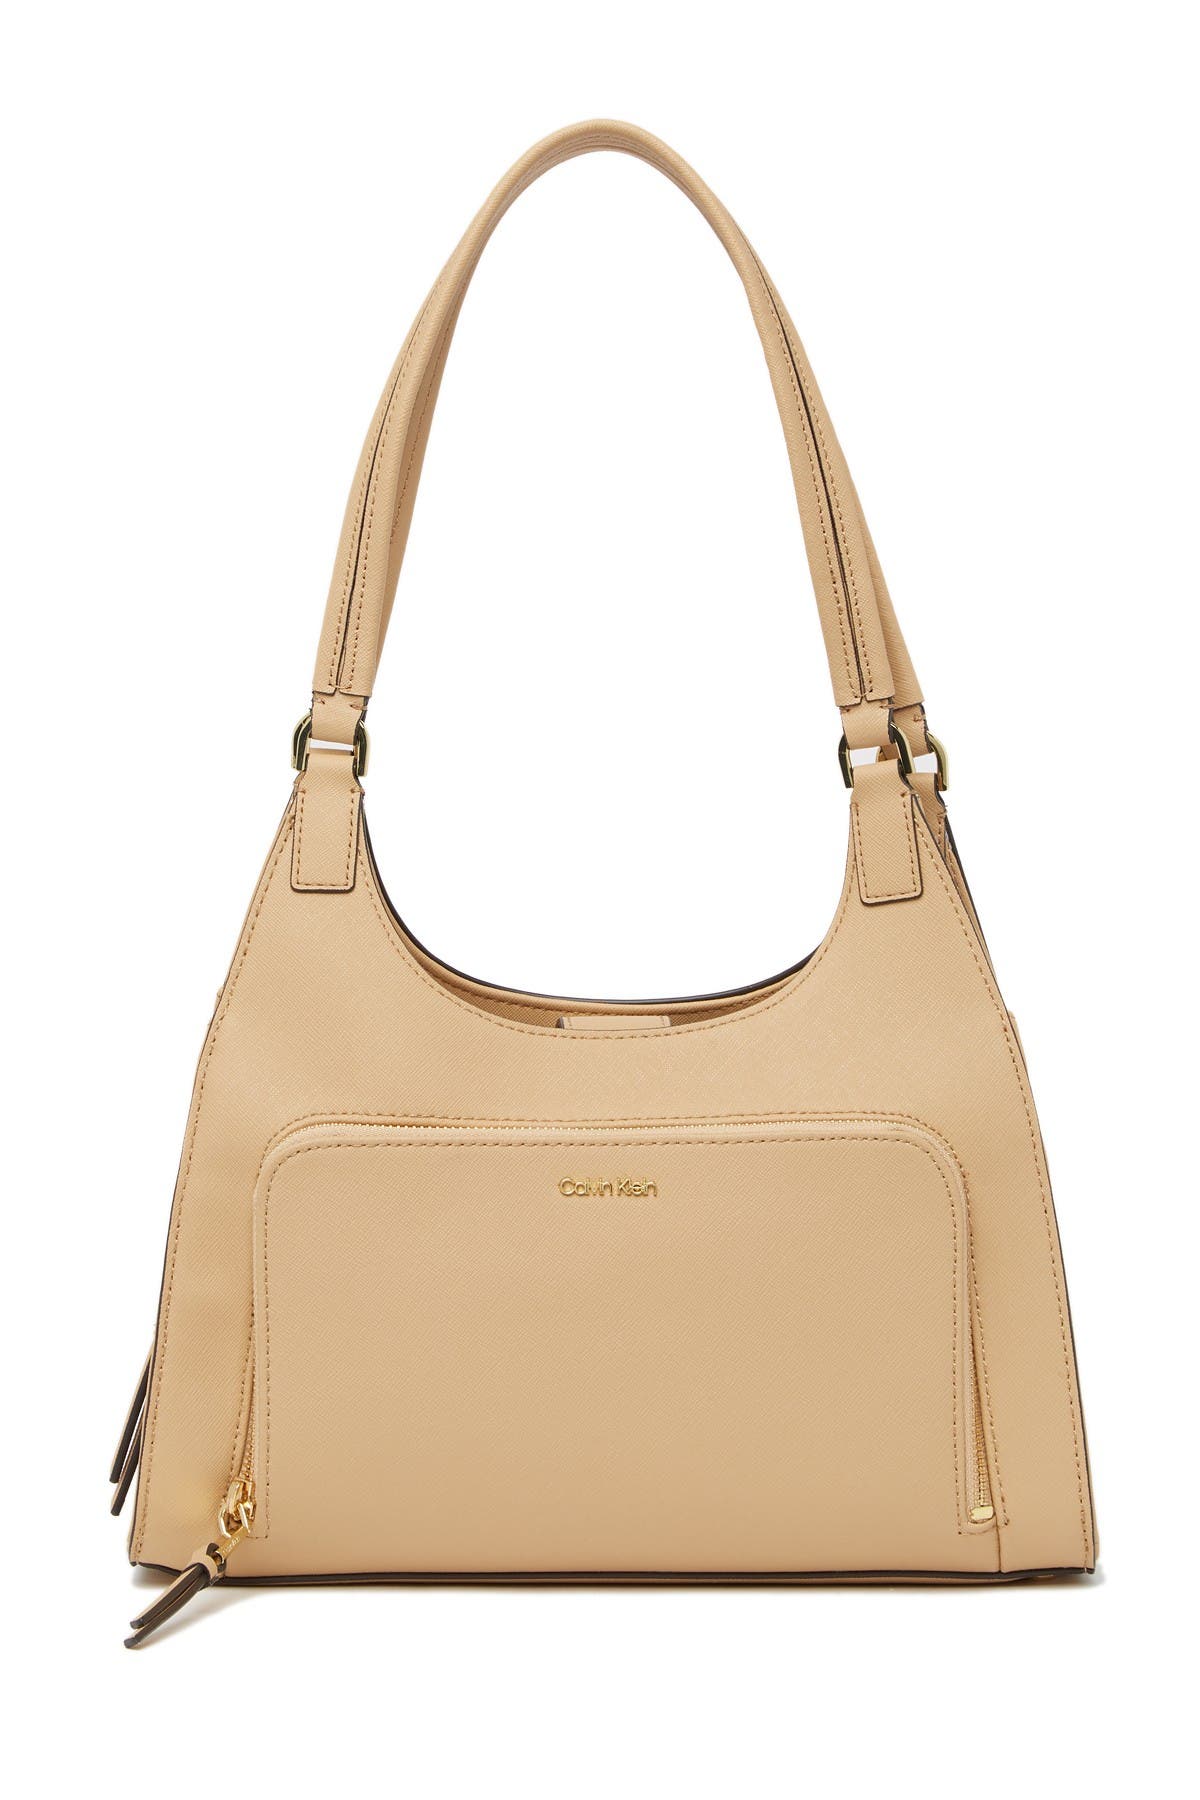 Calvin Klein Ava Saffiano Leather Organizational Shoulder Bag In Tan ModeSens